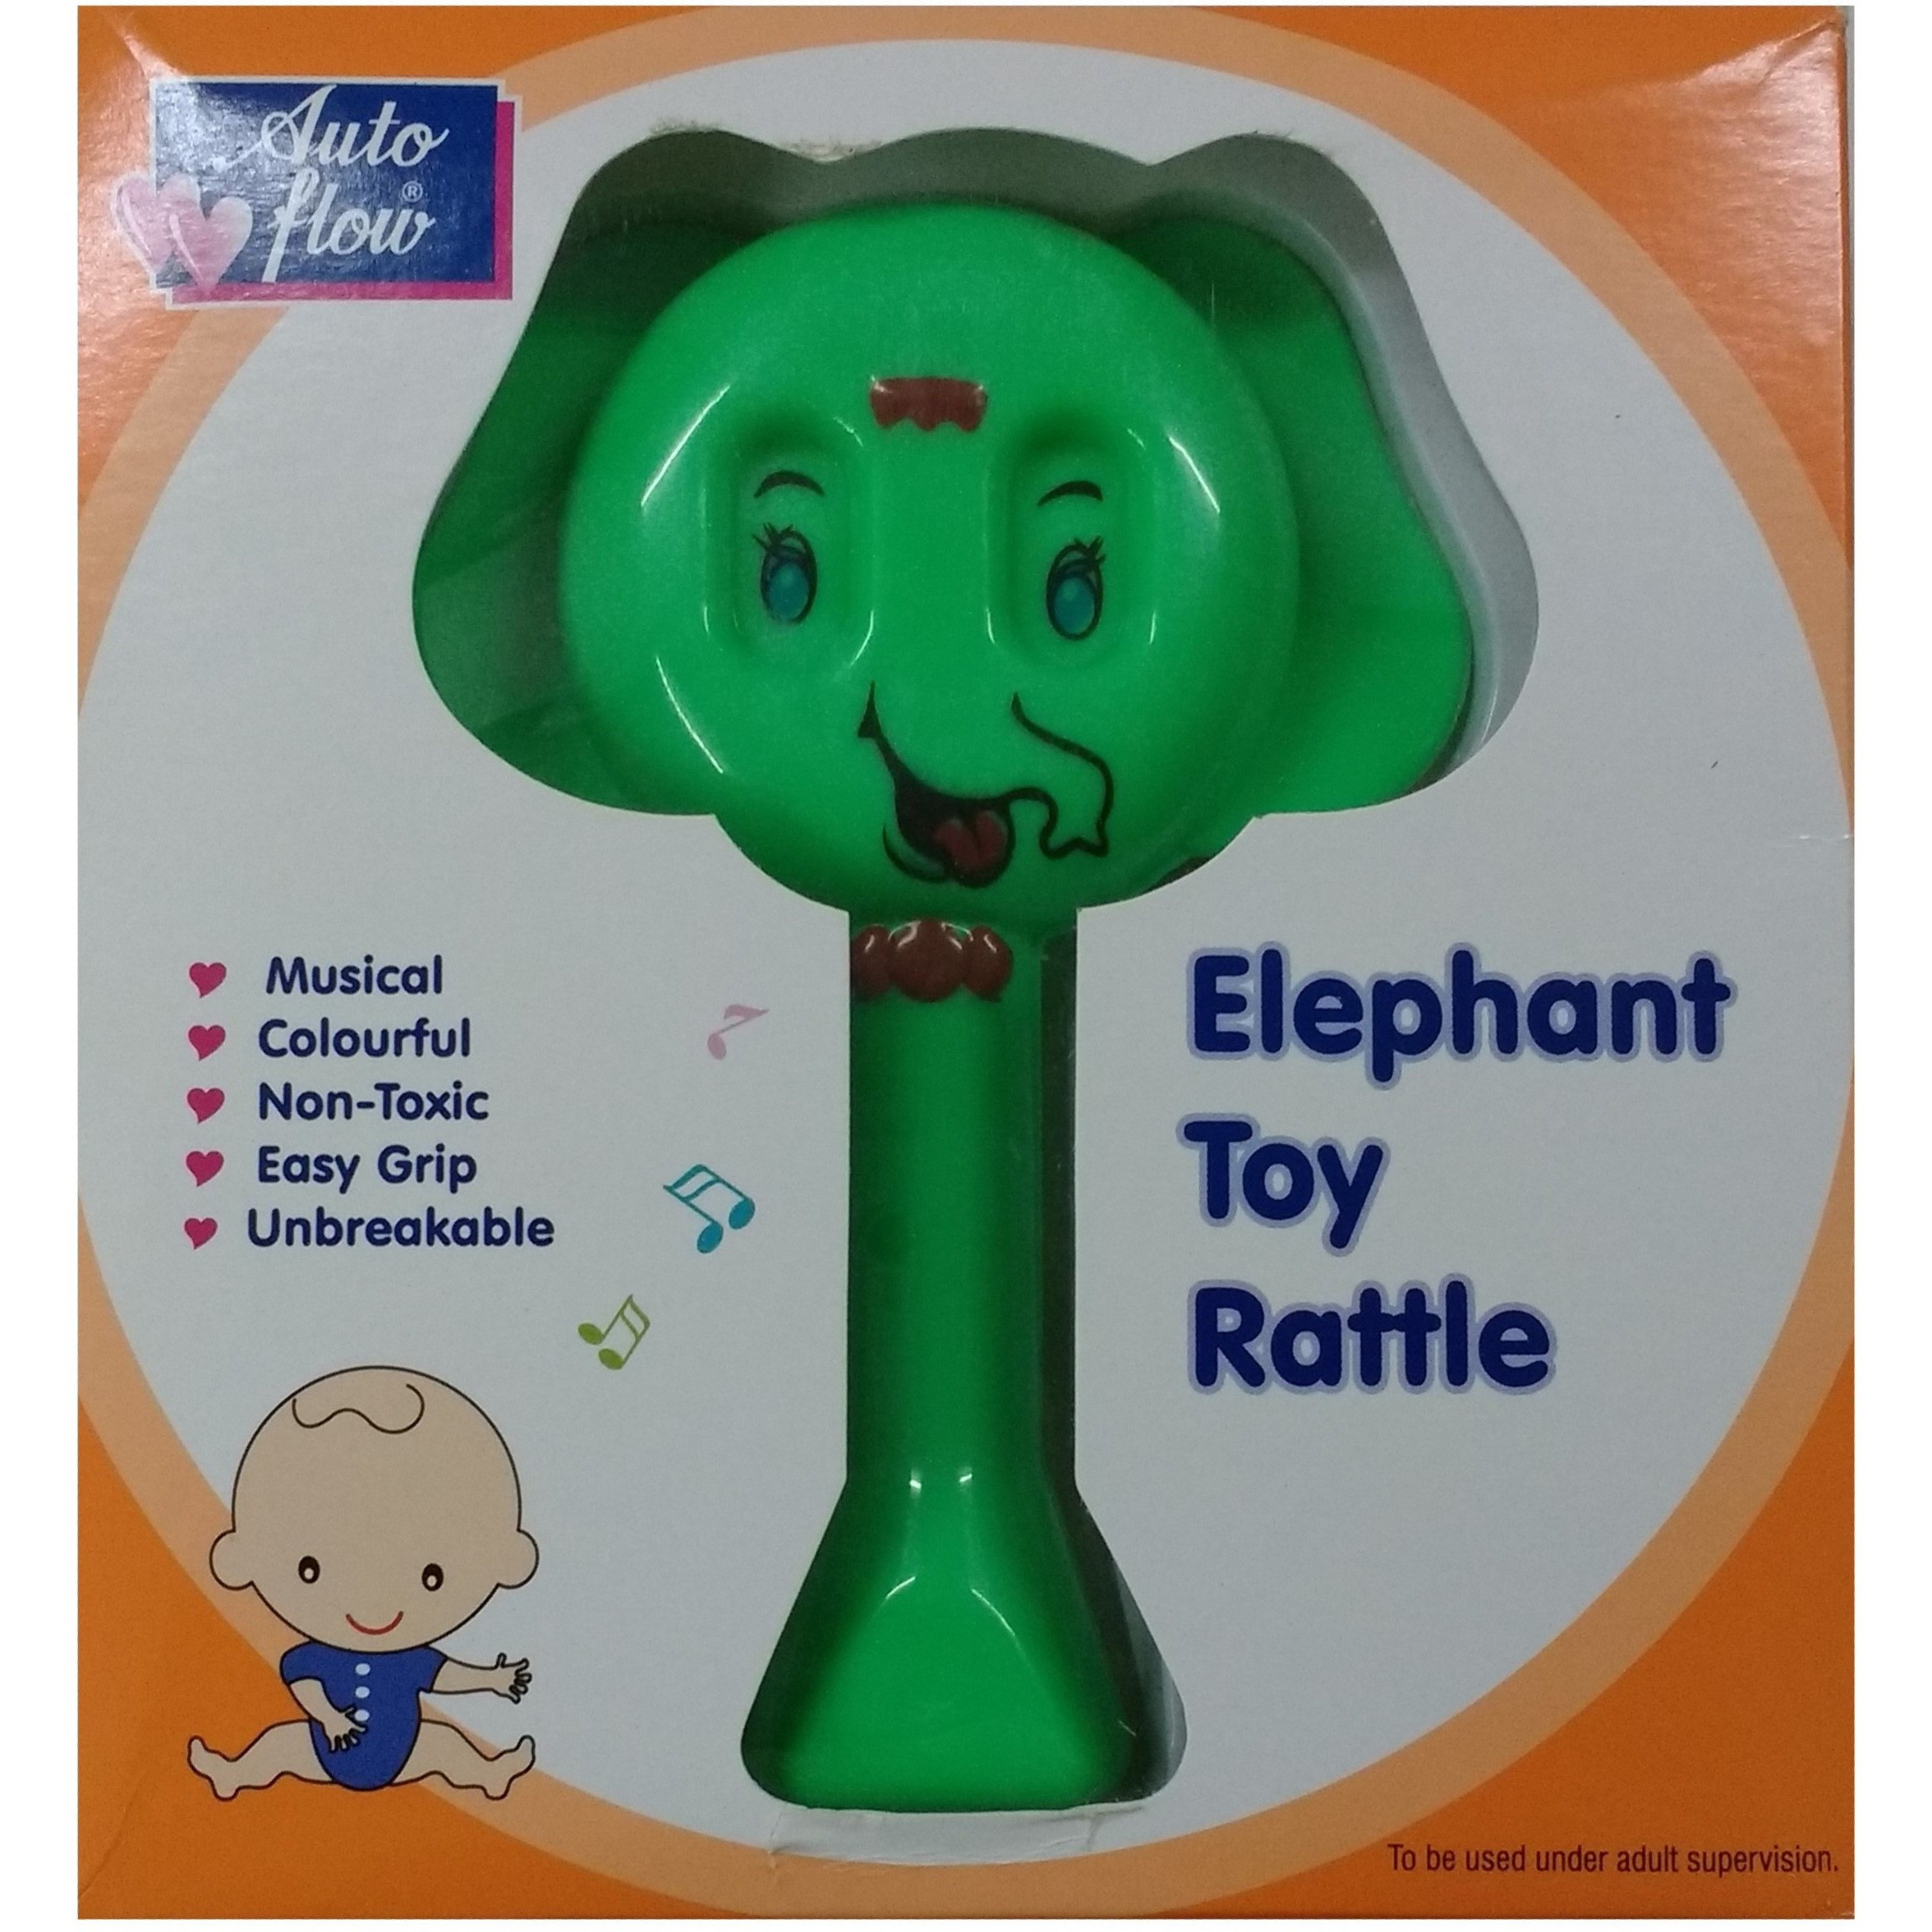 Auto Flow Rattle Toy- Elephant Toy - BT25 Green